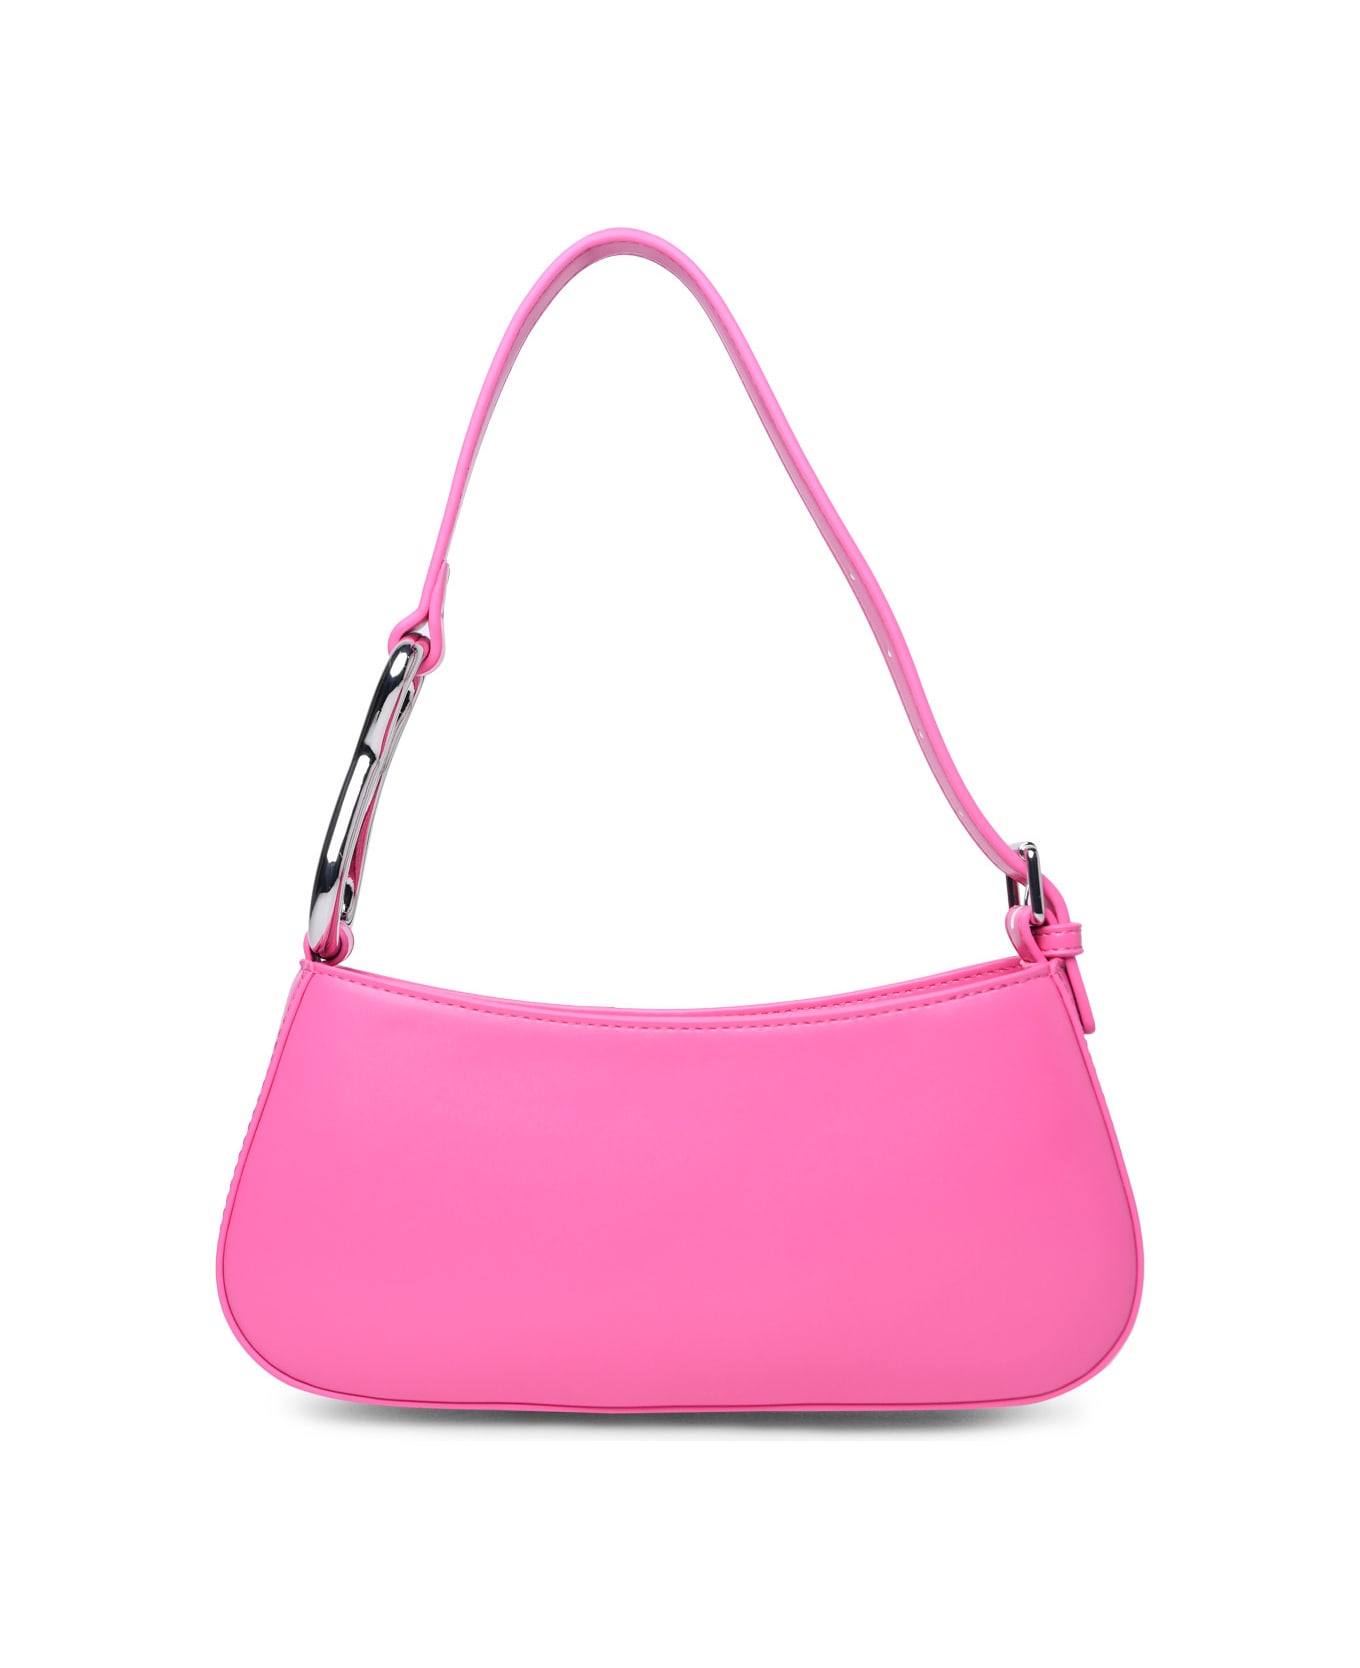 Chiara Ferragni 'cfloop' Pink Polyester Bag - Fuchsia トートバッグ